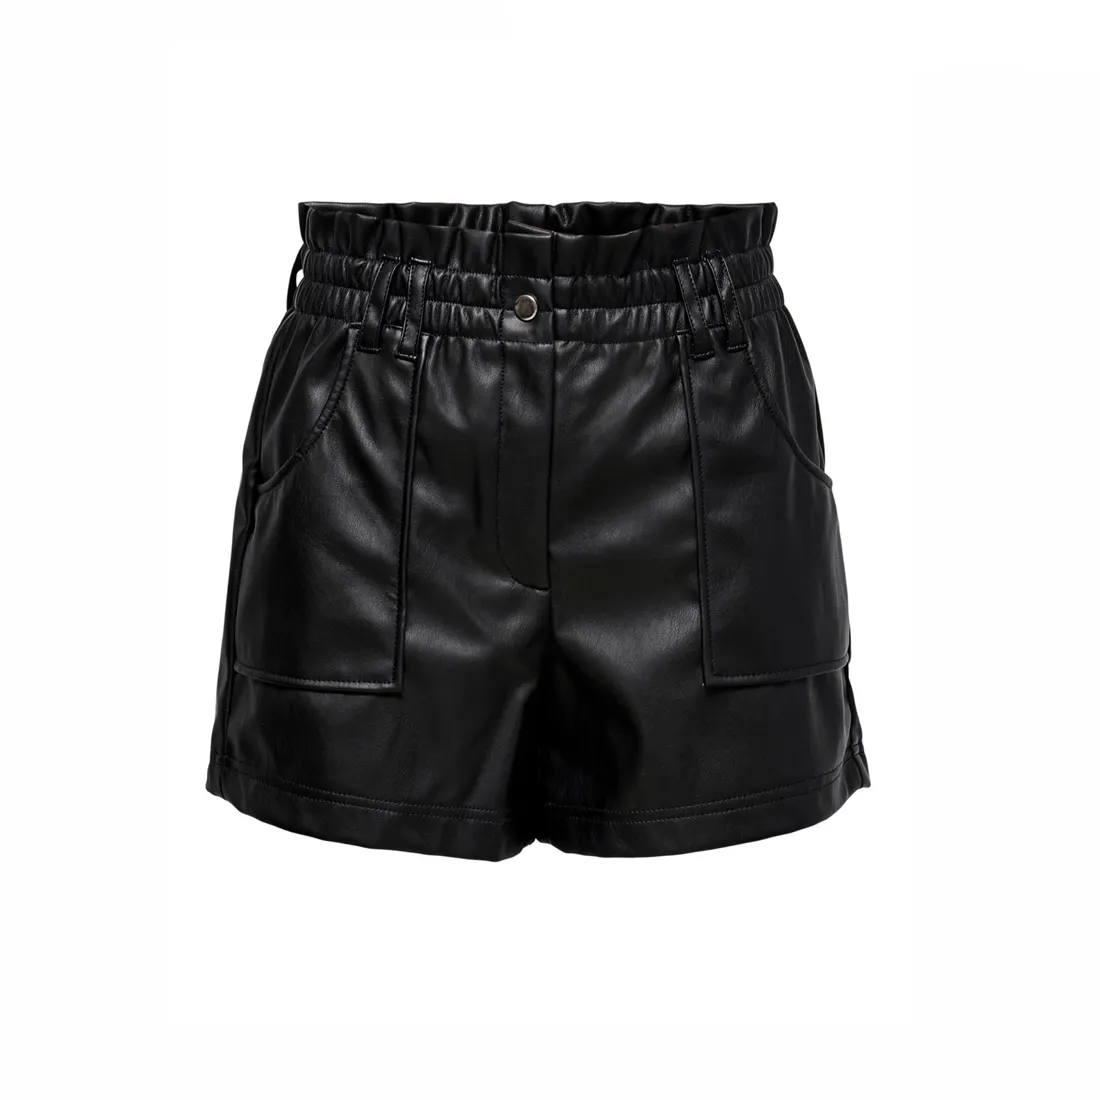 Sexy Club Patent Leather Stretch Black Hot Faux Leather Shorts Women Leather Shorts For Women